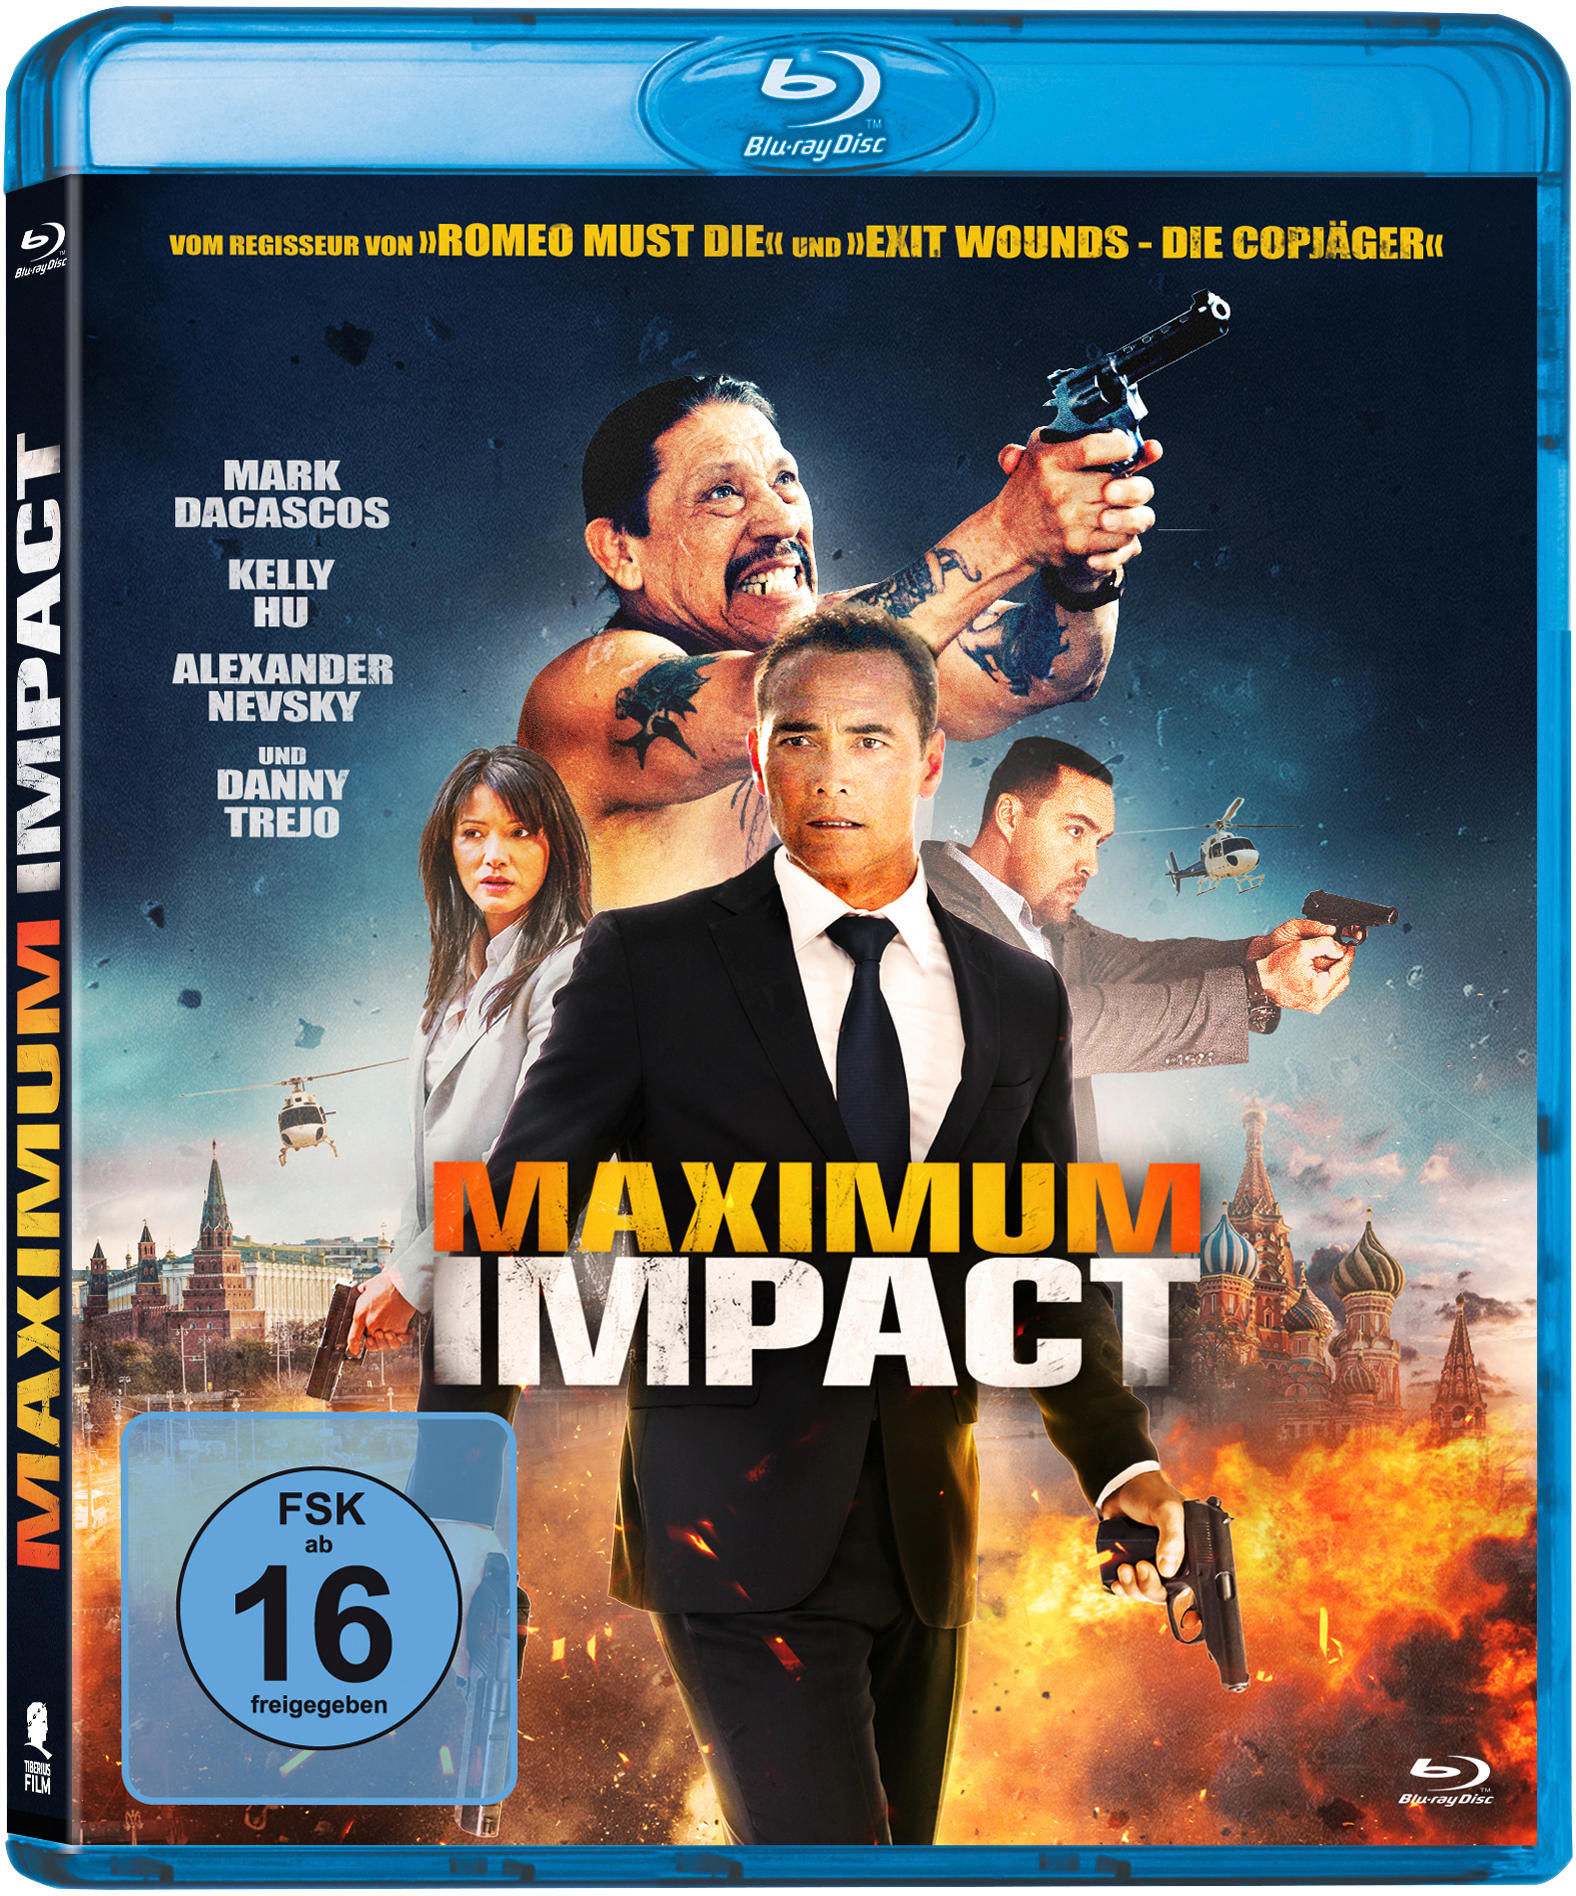 Impact Maximum Blu-ray